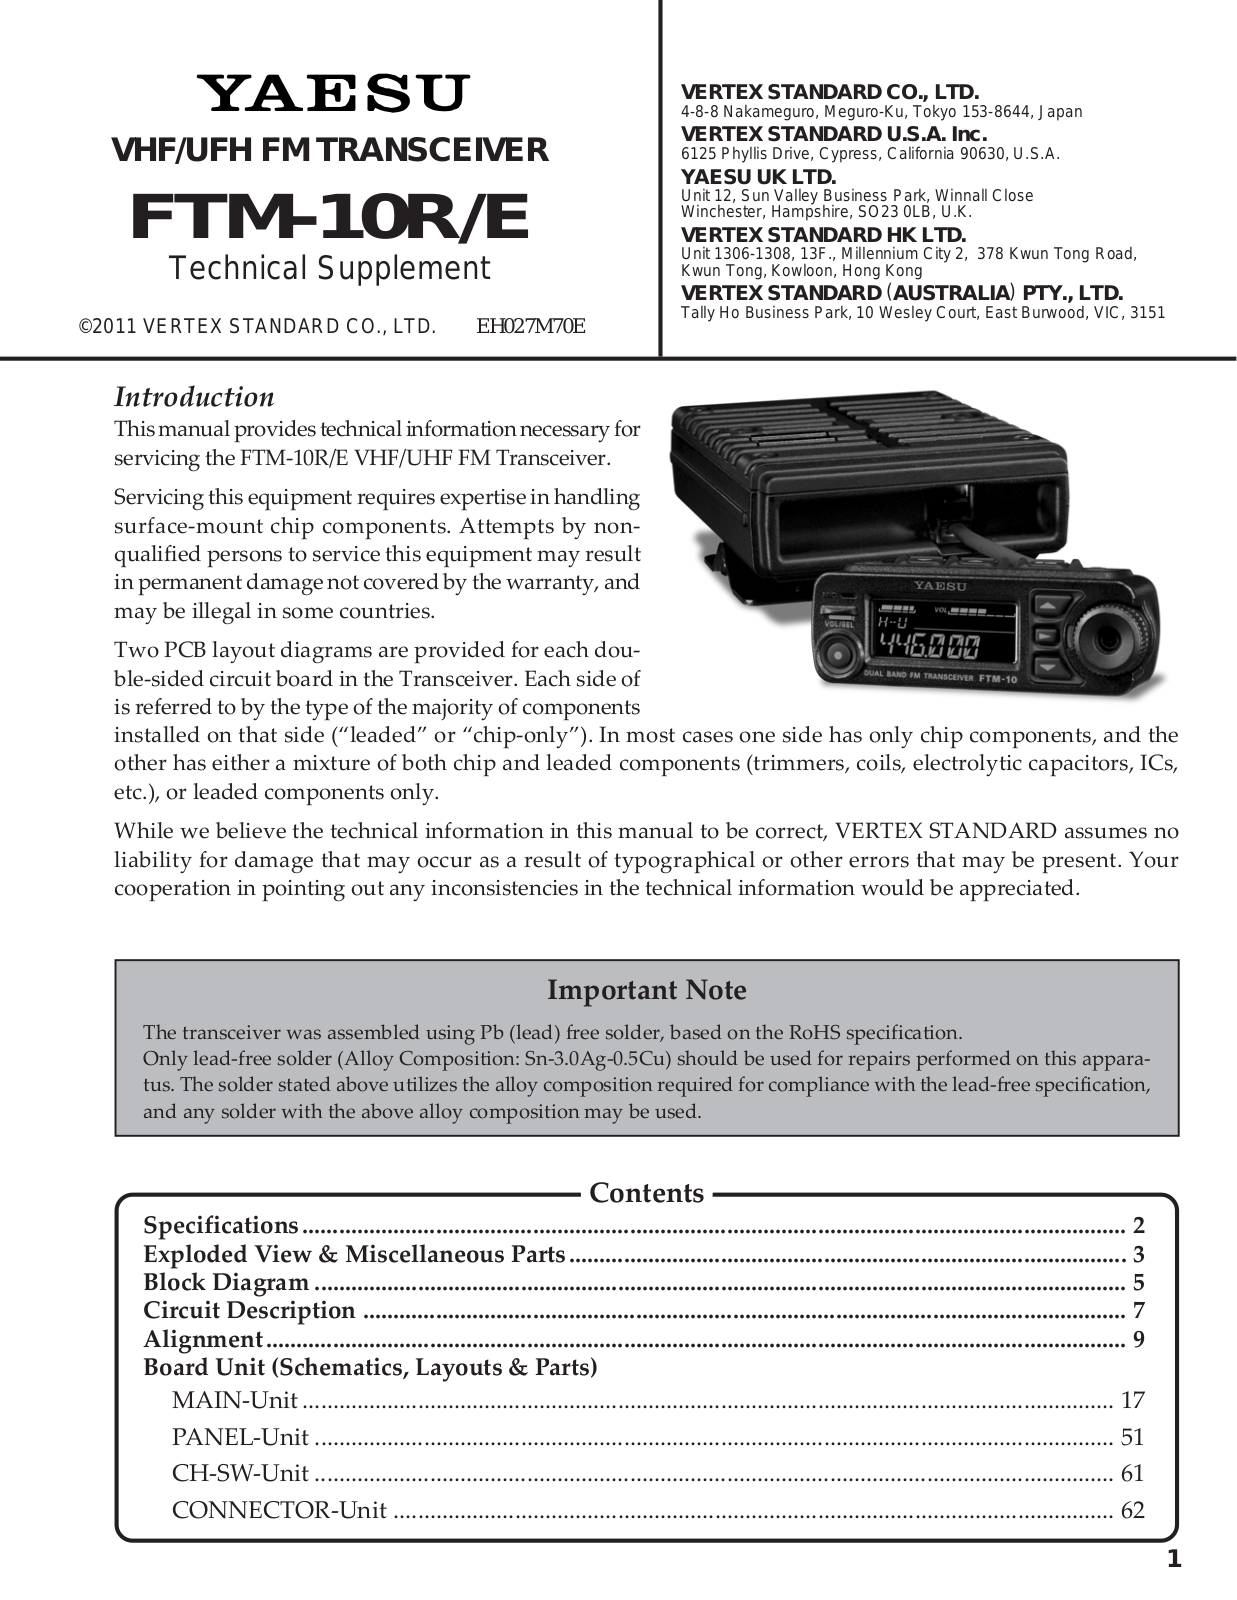 Yaesu FTM-10R Service Manual